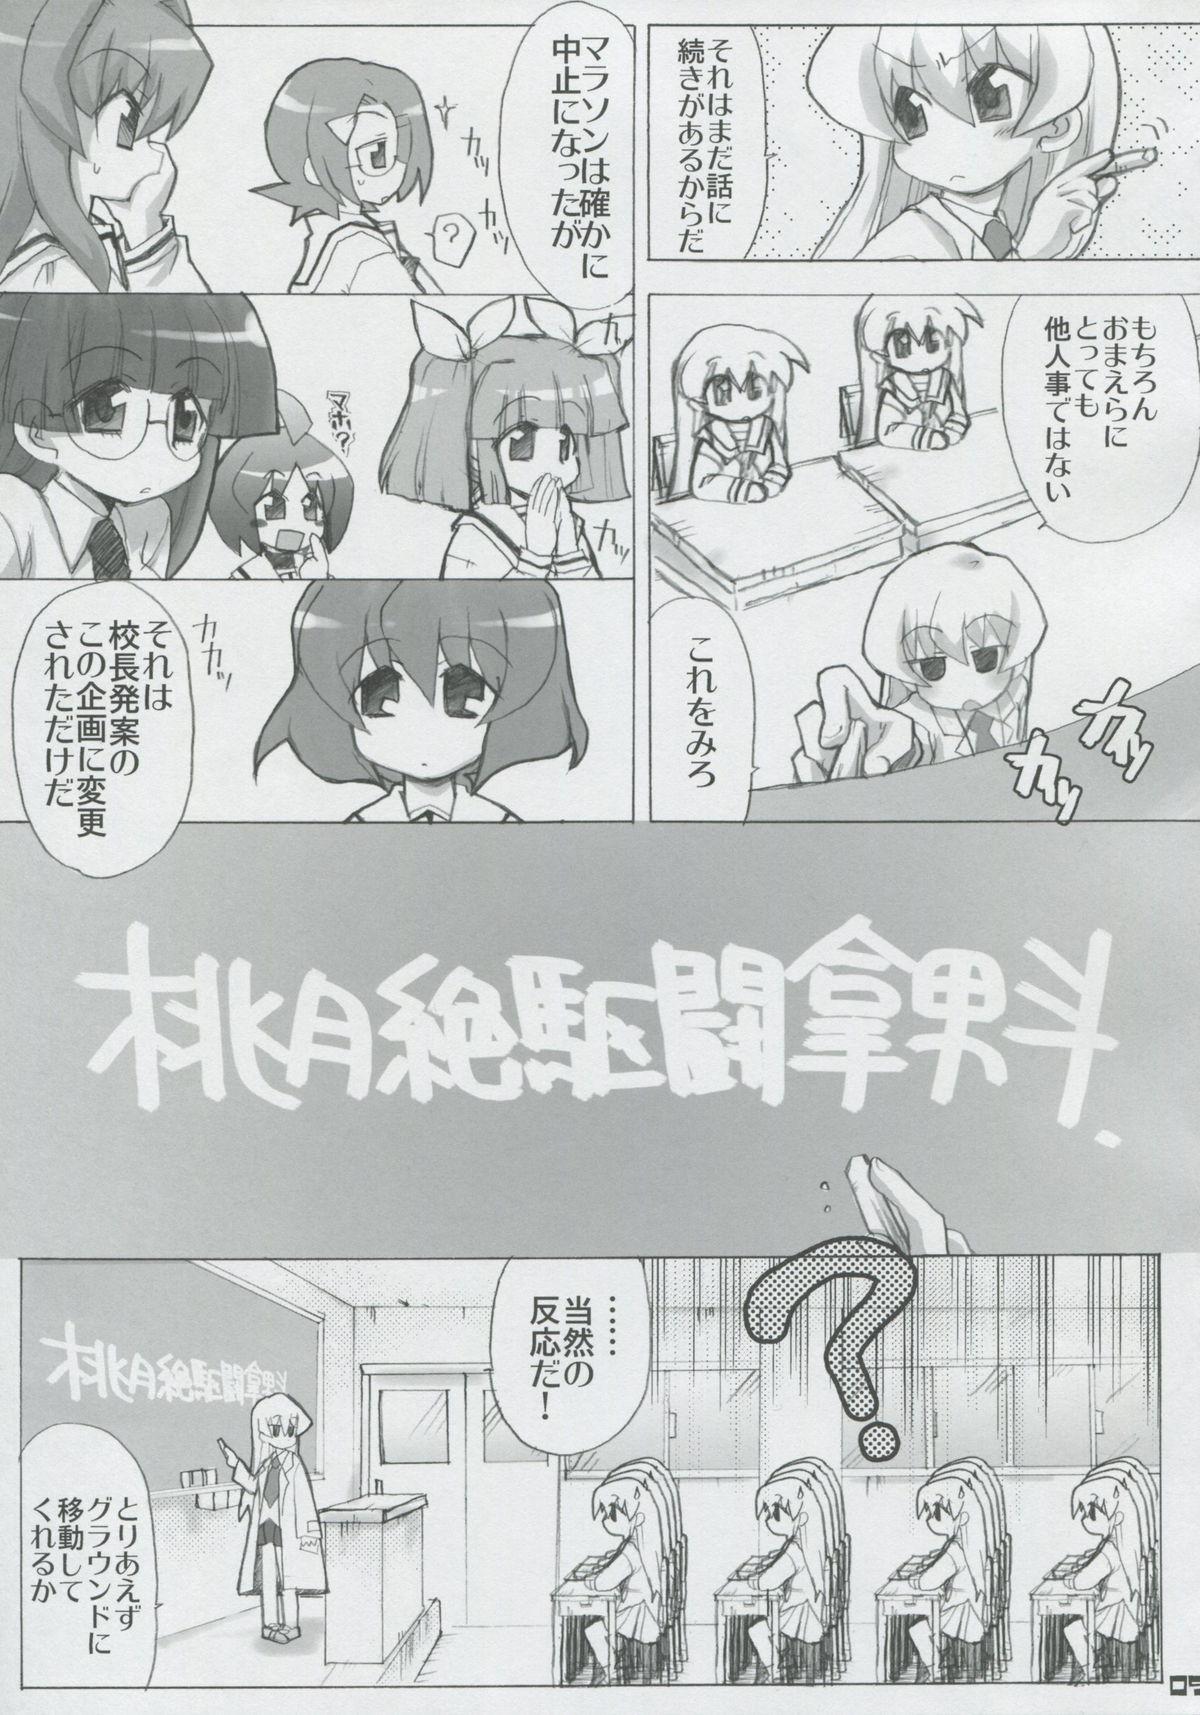 Teenie Momo Tsuki Monsters 1st-half - Pani poni dash Little - Page 8